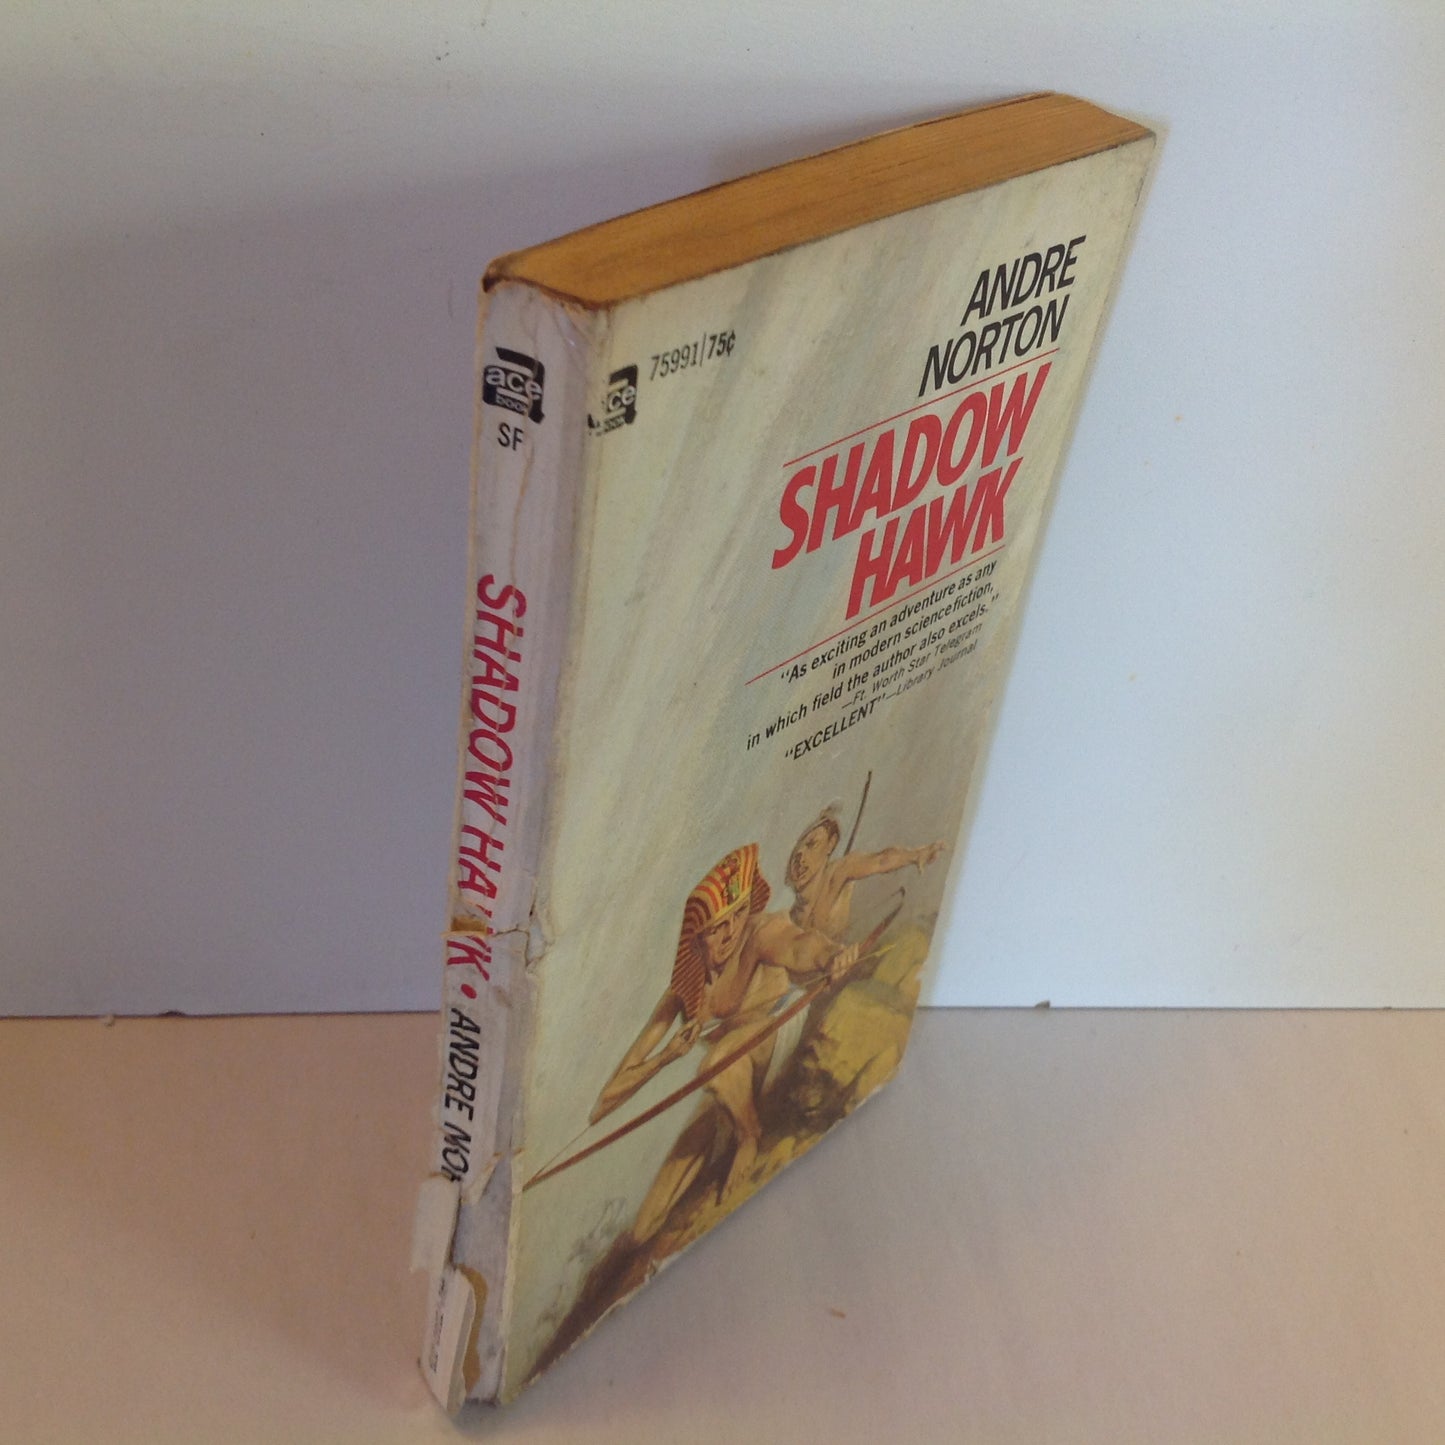 Vintage 1960 Mass Market Paperback Shadow Hawk Andre Norton ACE Books